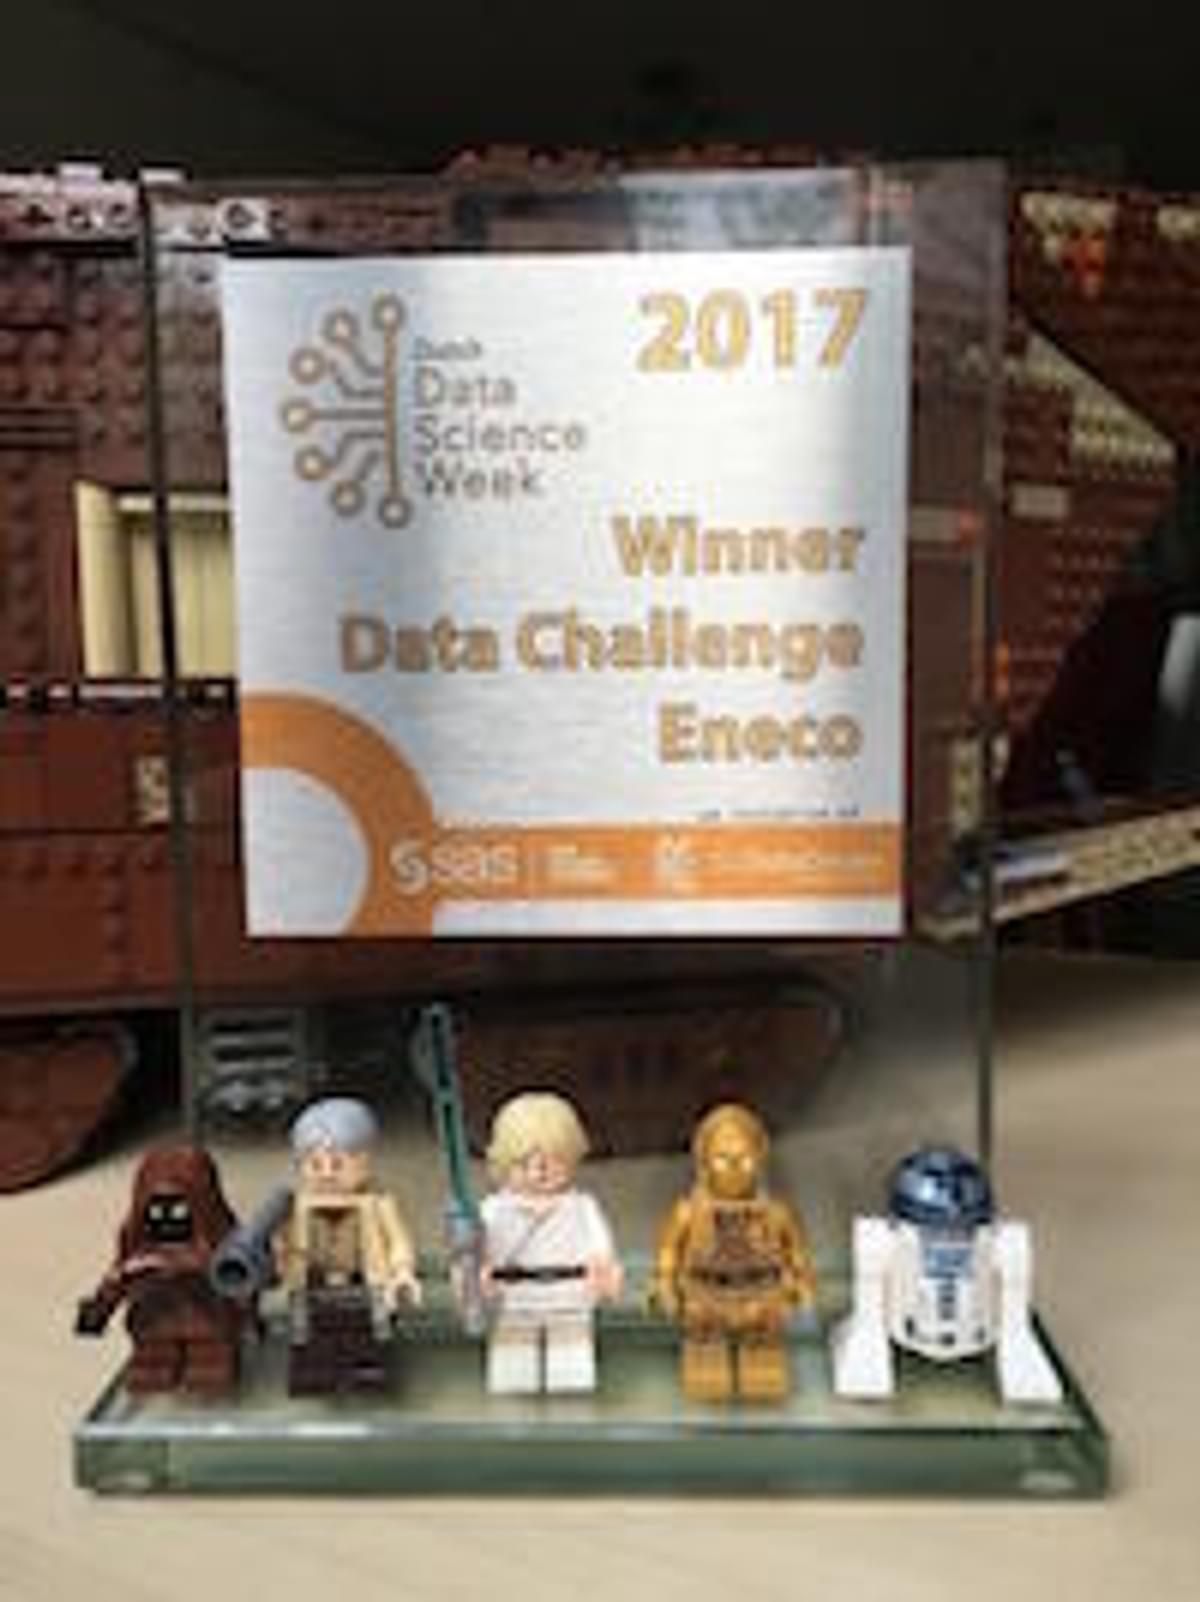 Coders Co. winnen Eneco Data Challenge image